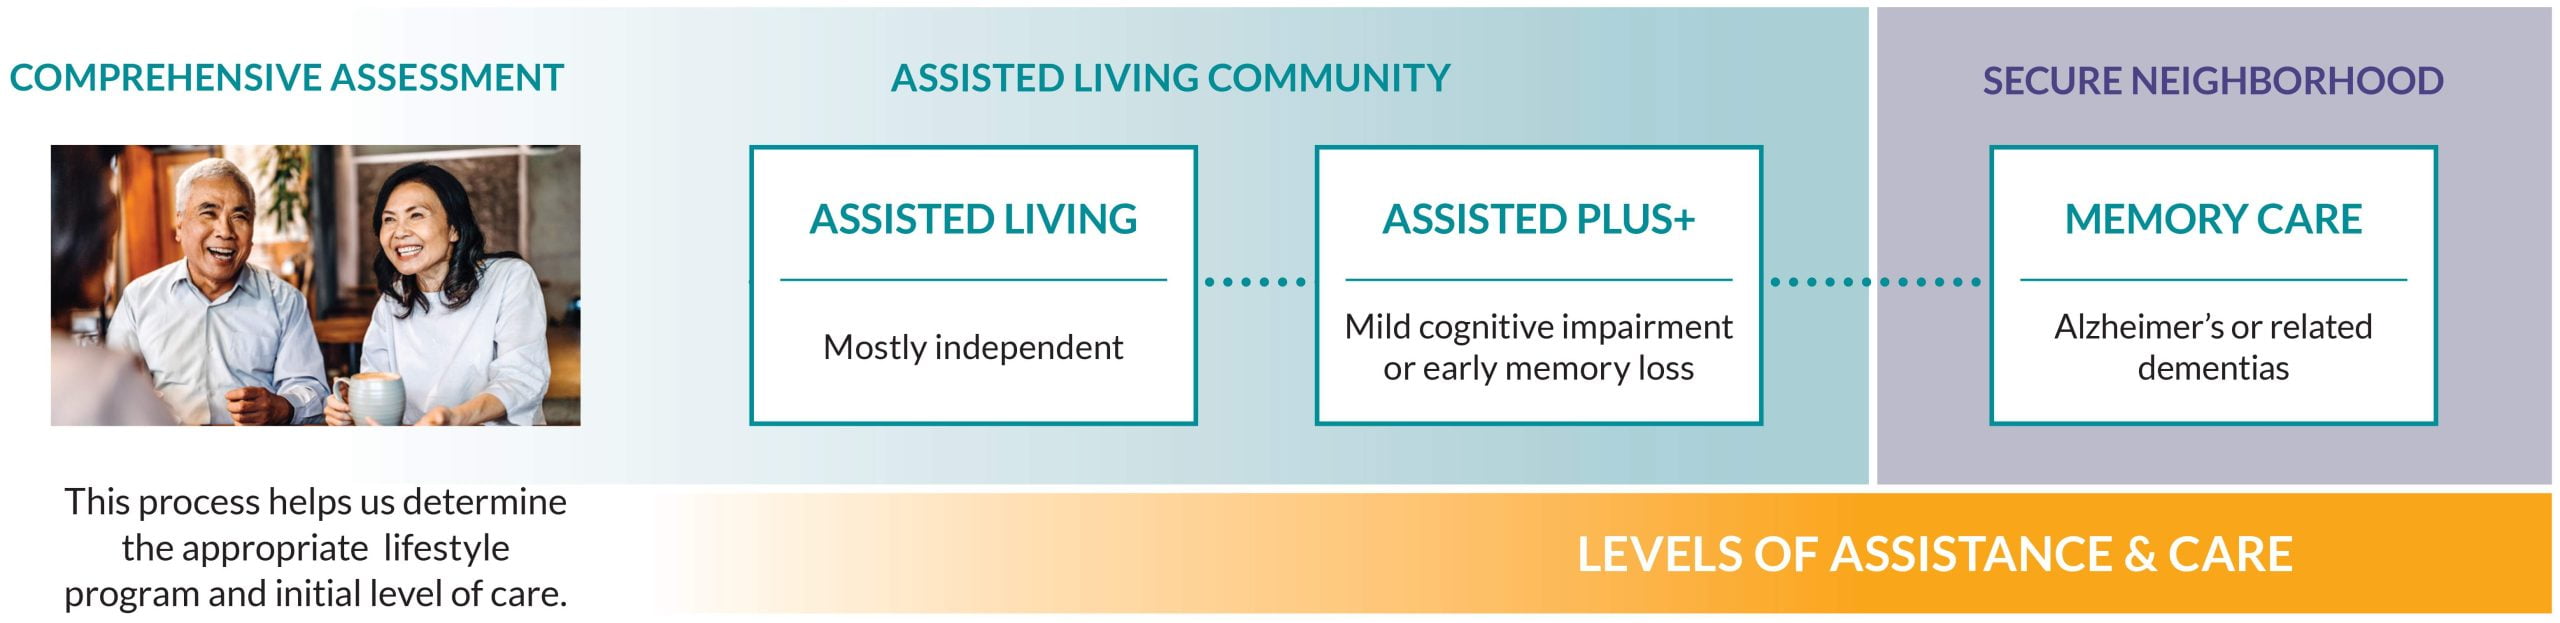 senior care levels at Varenita of Simi Valley retirement community